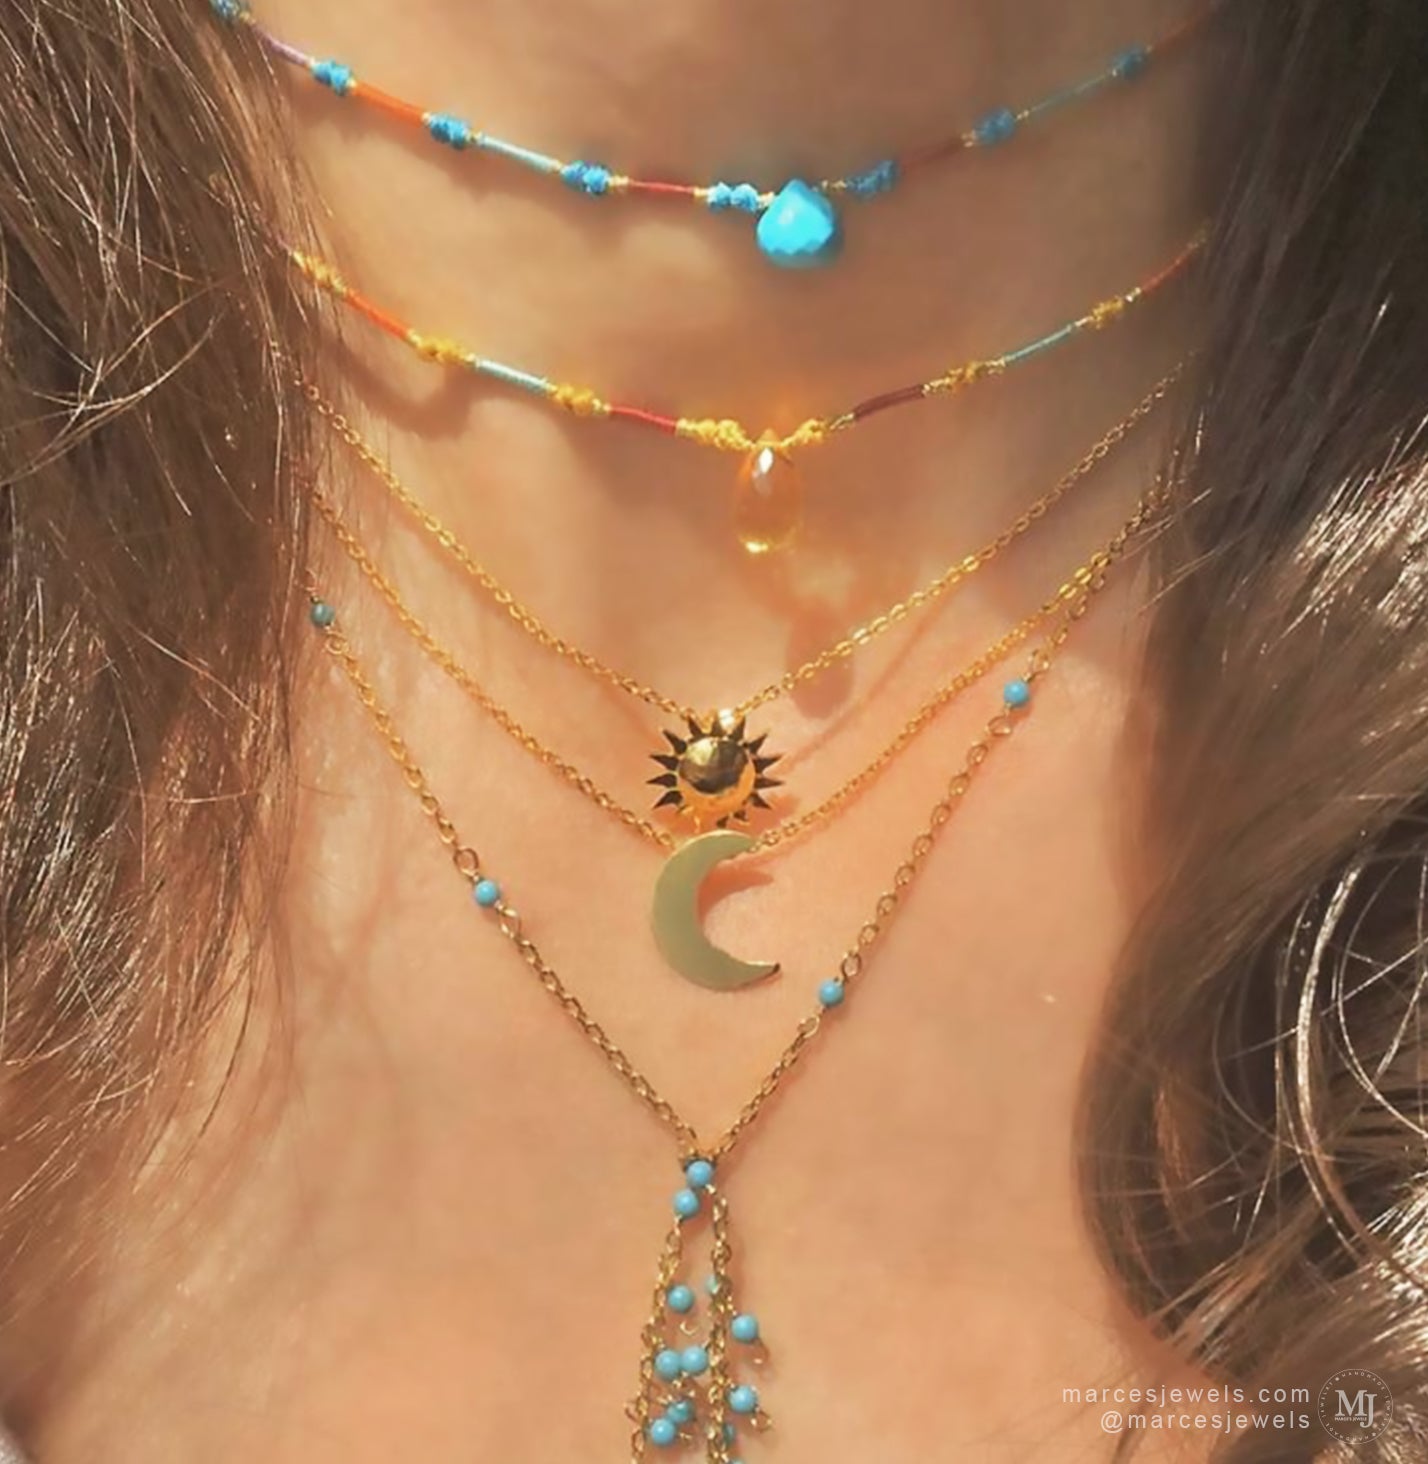 PLAIN SUN necklace